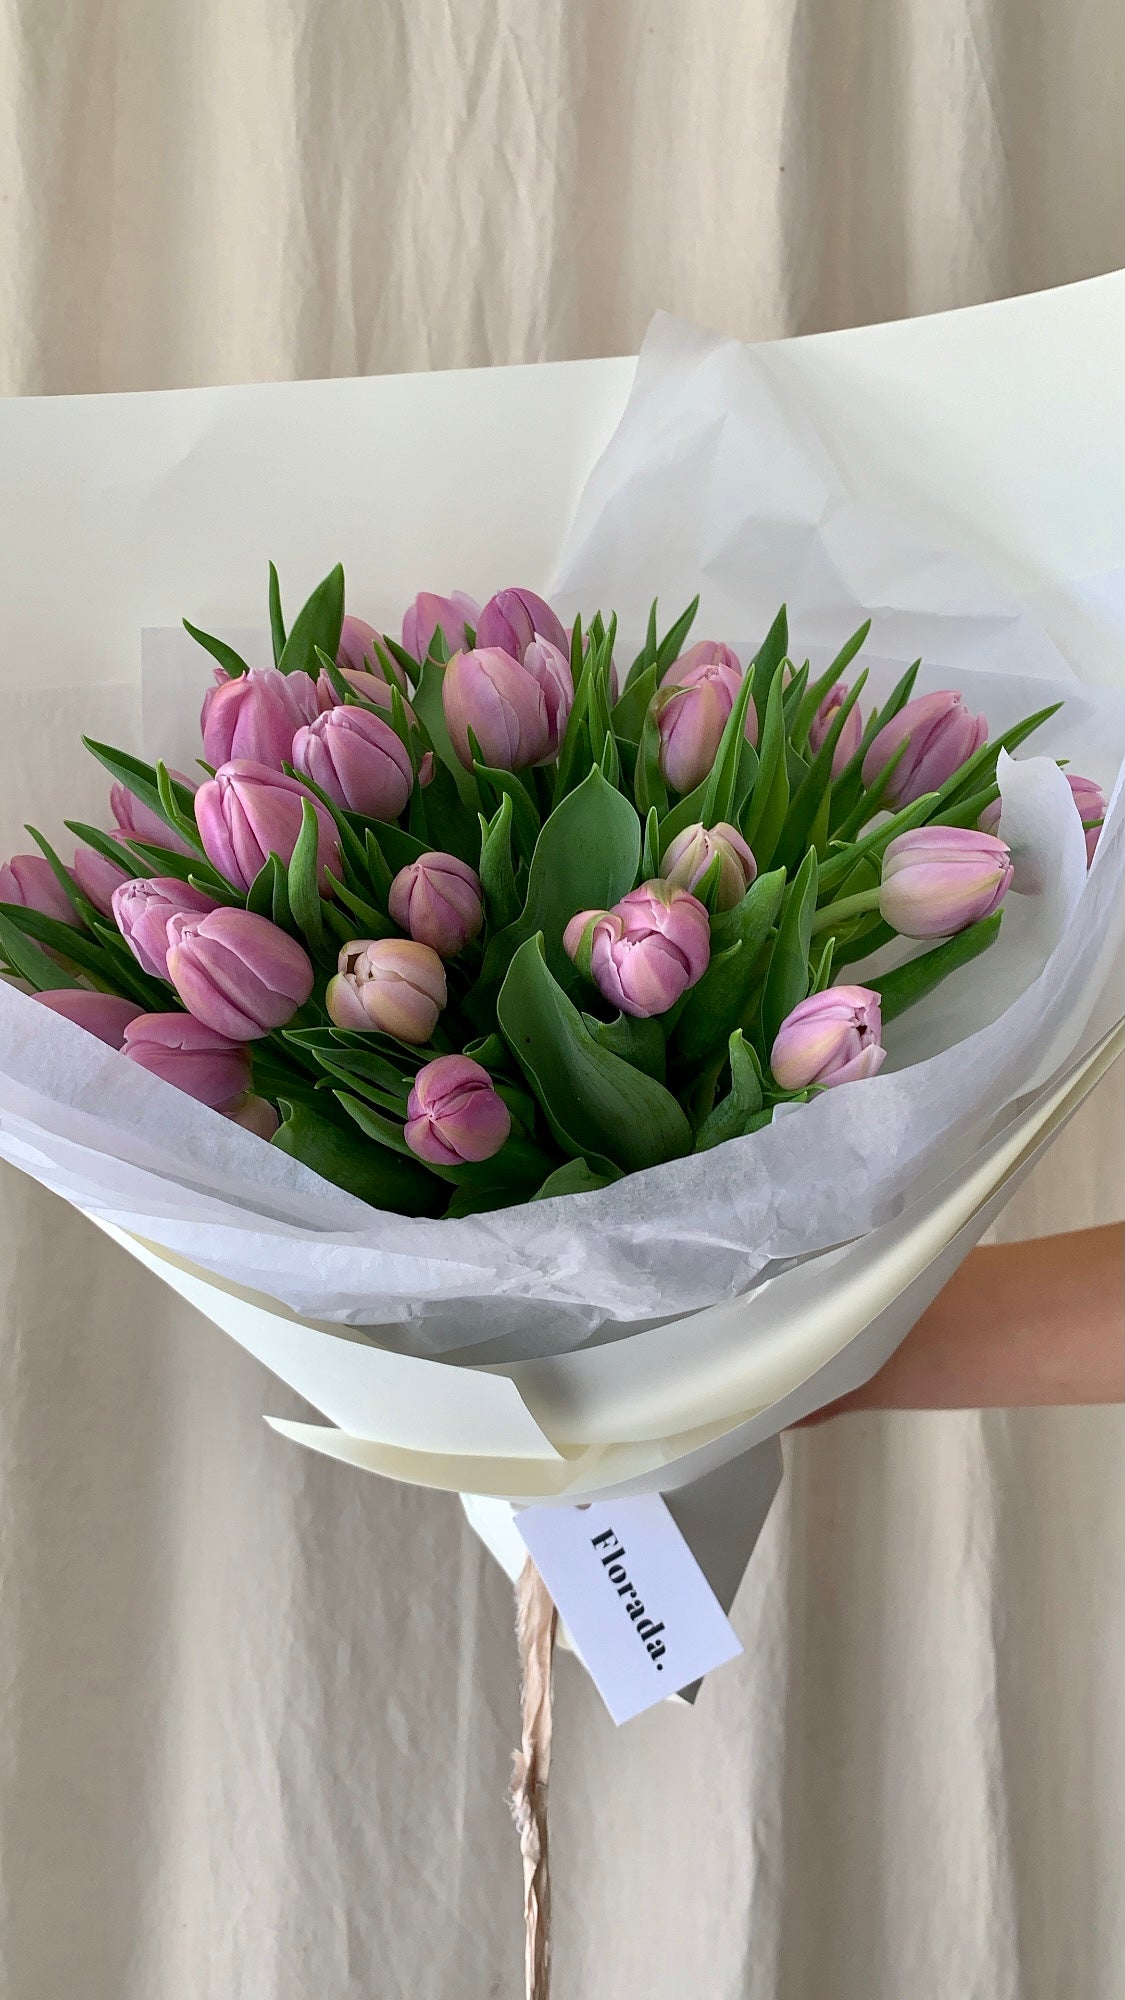 En masse Australian grown tulips in beautiful stone coloured paper and silk ribbon. 